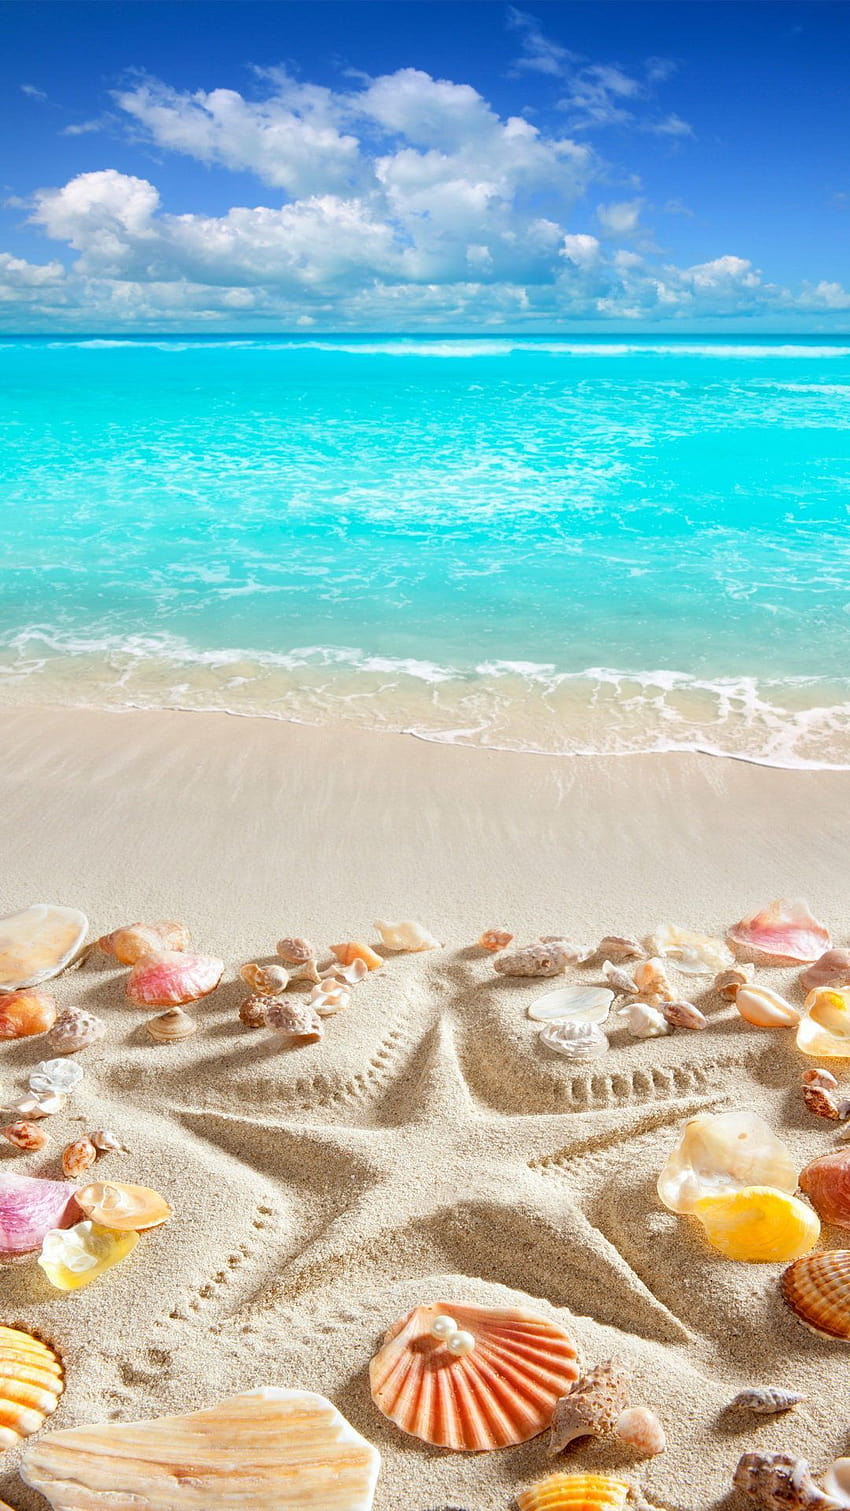 Teléfono Aguas escénicas estrella tropical, playa tropical verano océano fondo de pantalla del teléfono